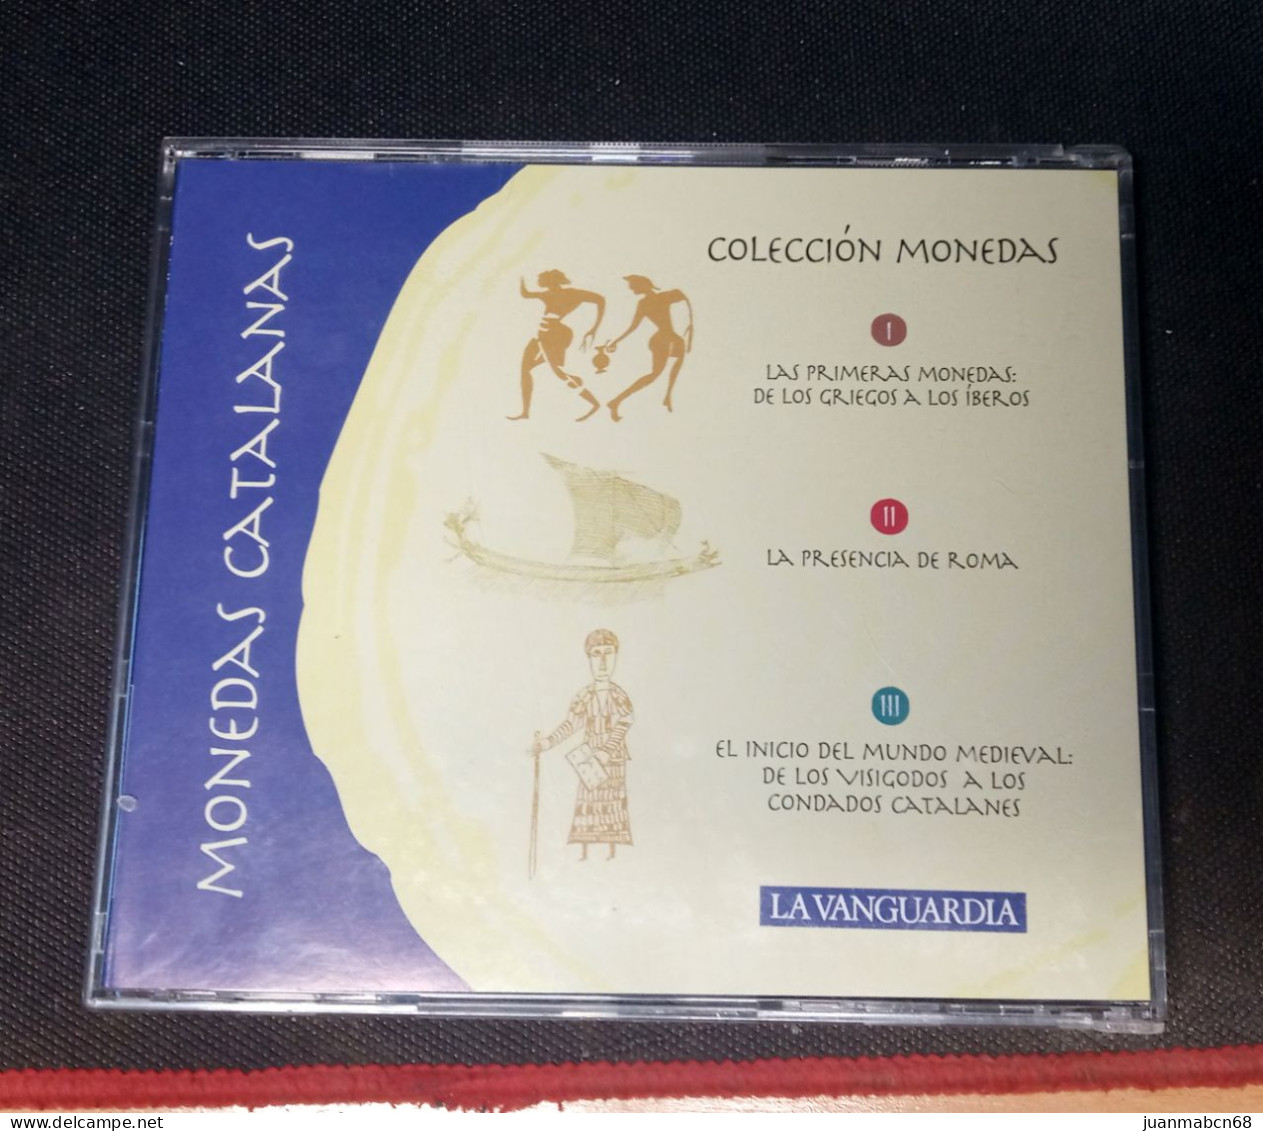 Coleccion La Vanguardia ”De La Peseta Al Euro” -  Collections